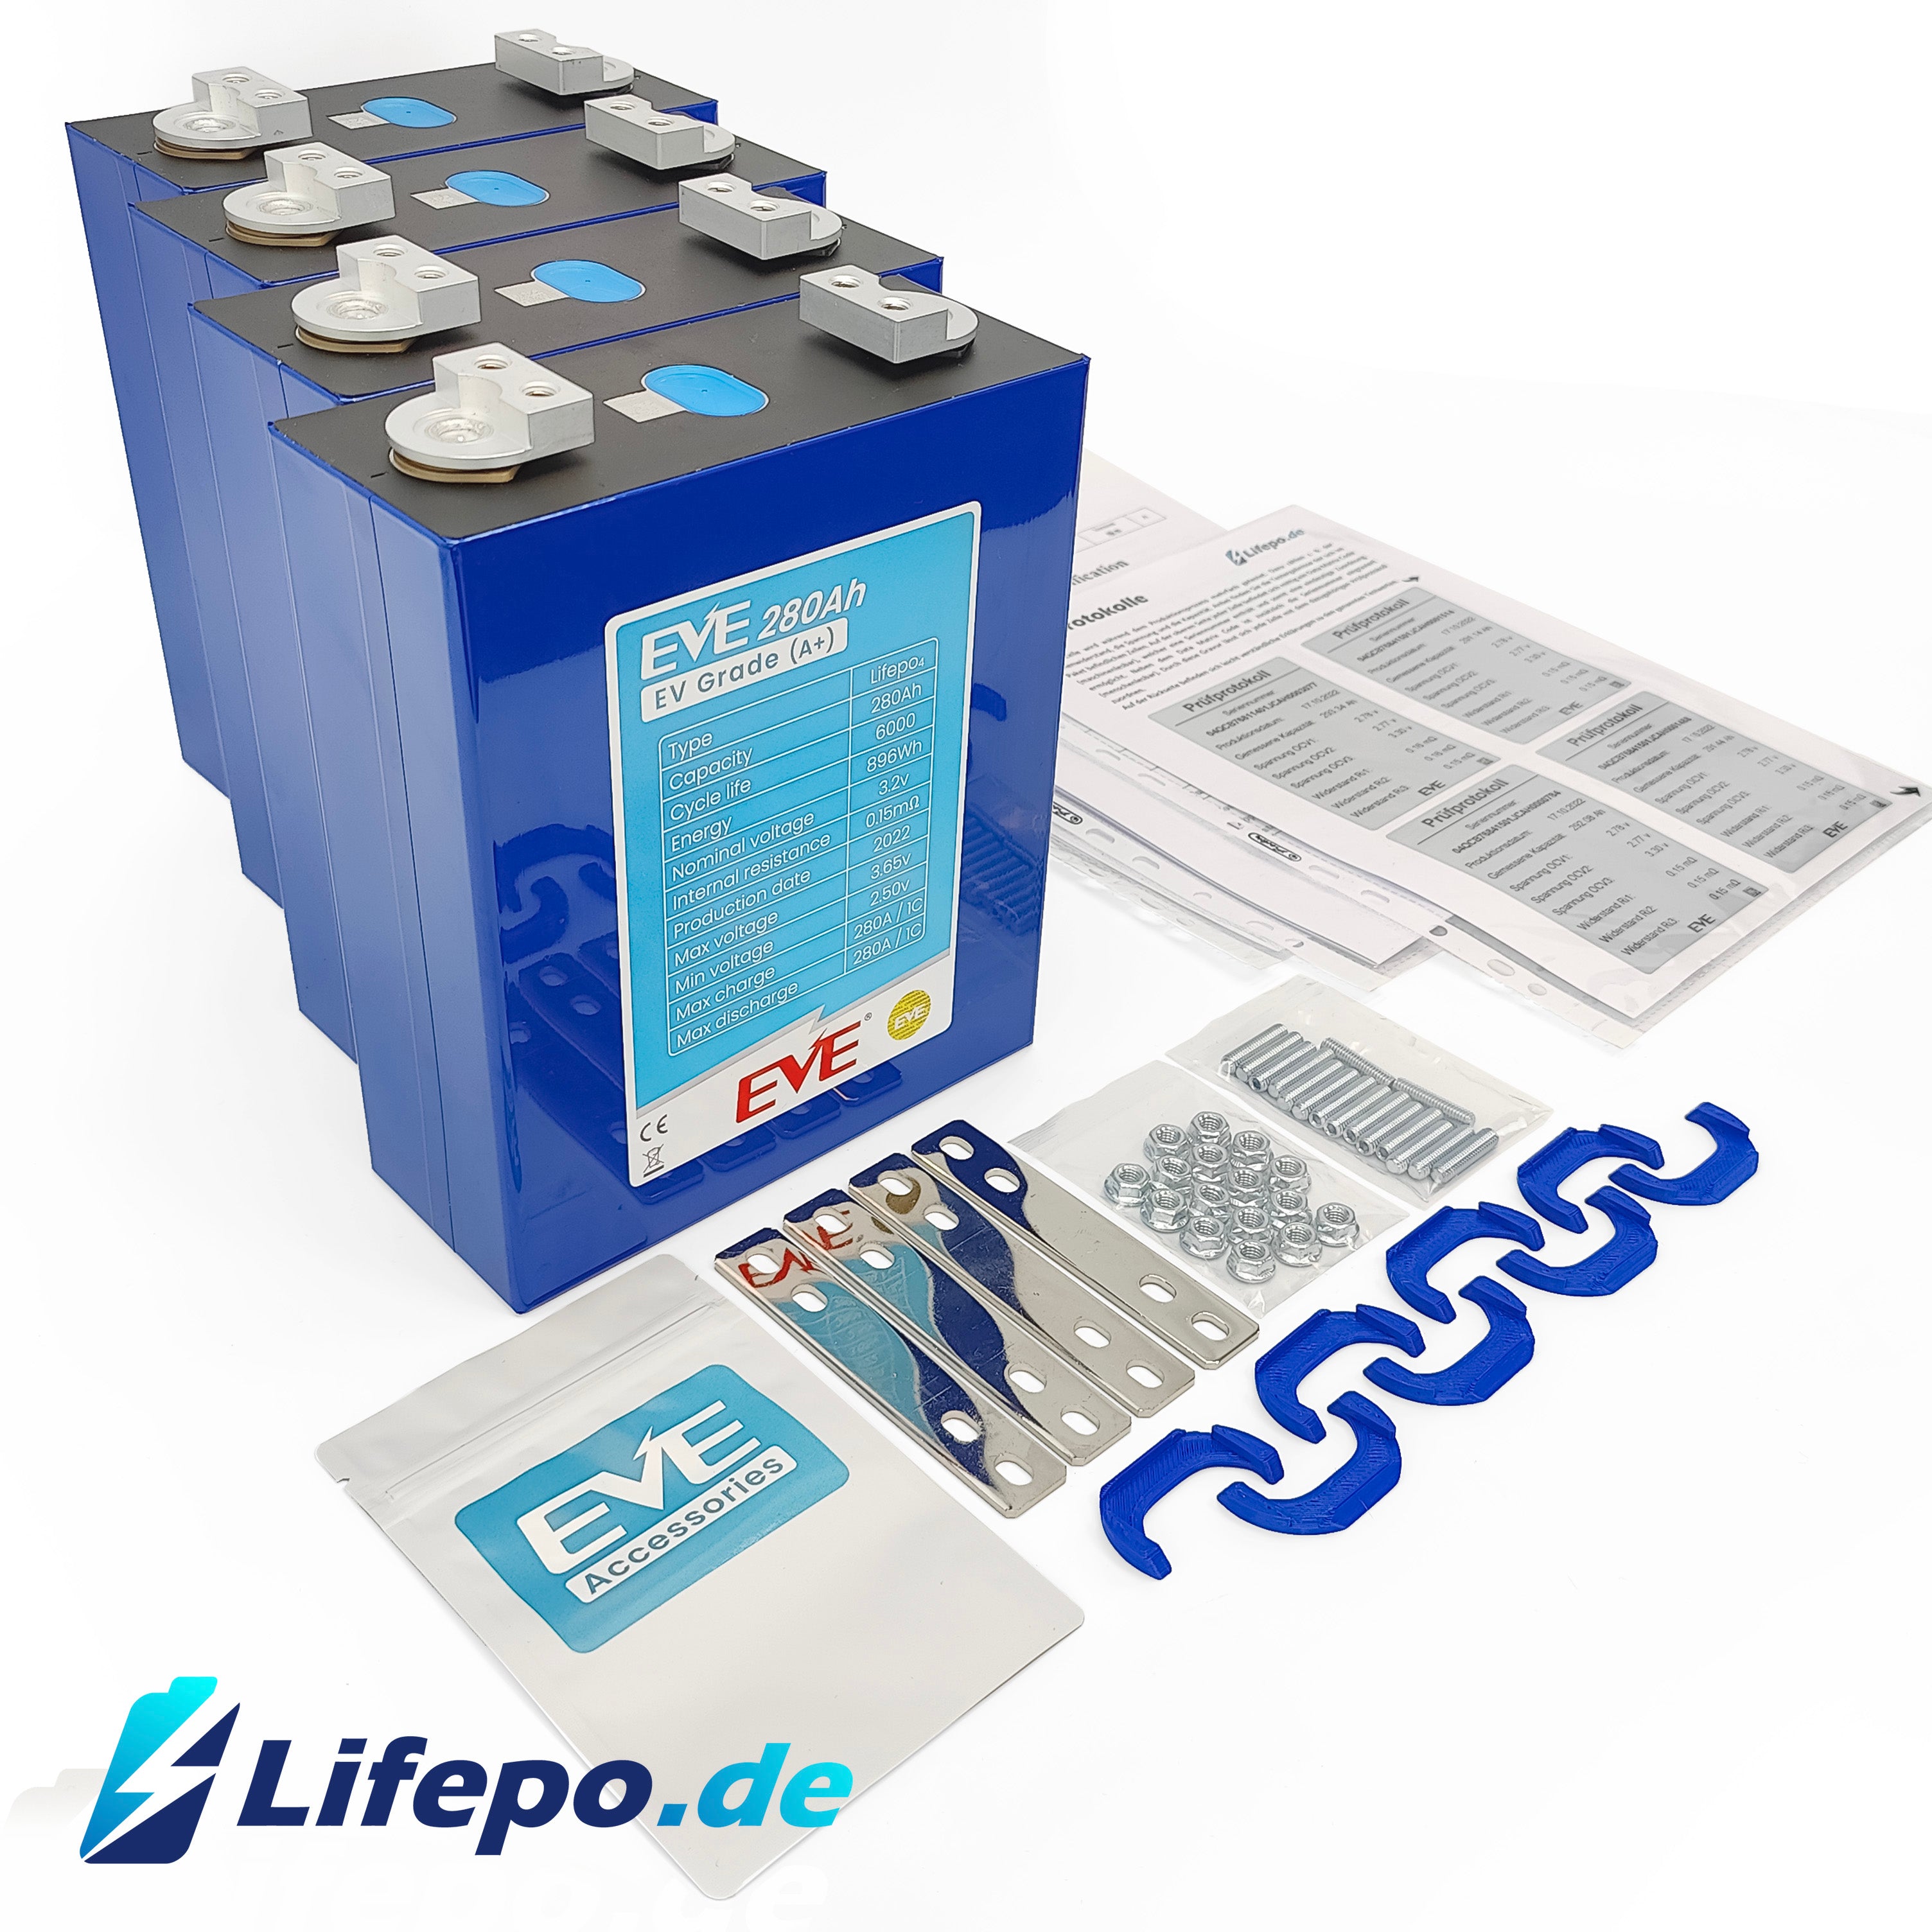 12v 280Ah Lifepo4 Batteriesystem mit EVE Grade A+ 4kWh –